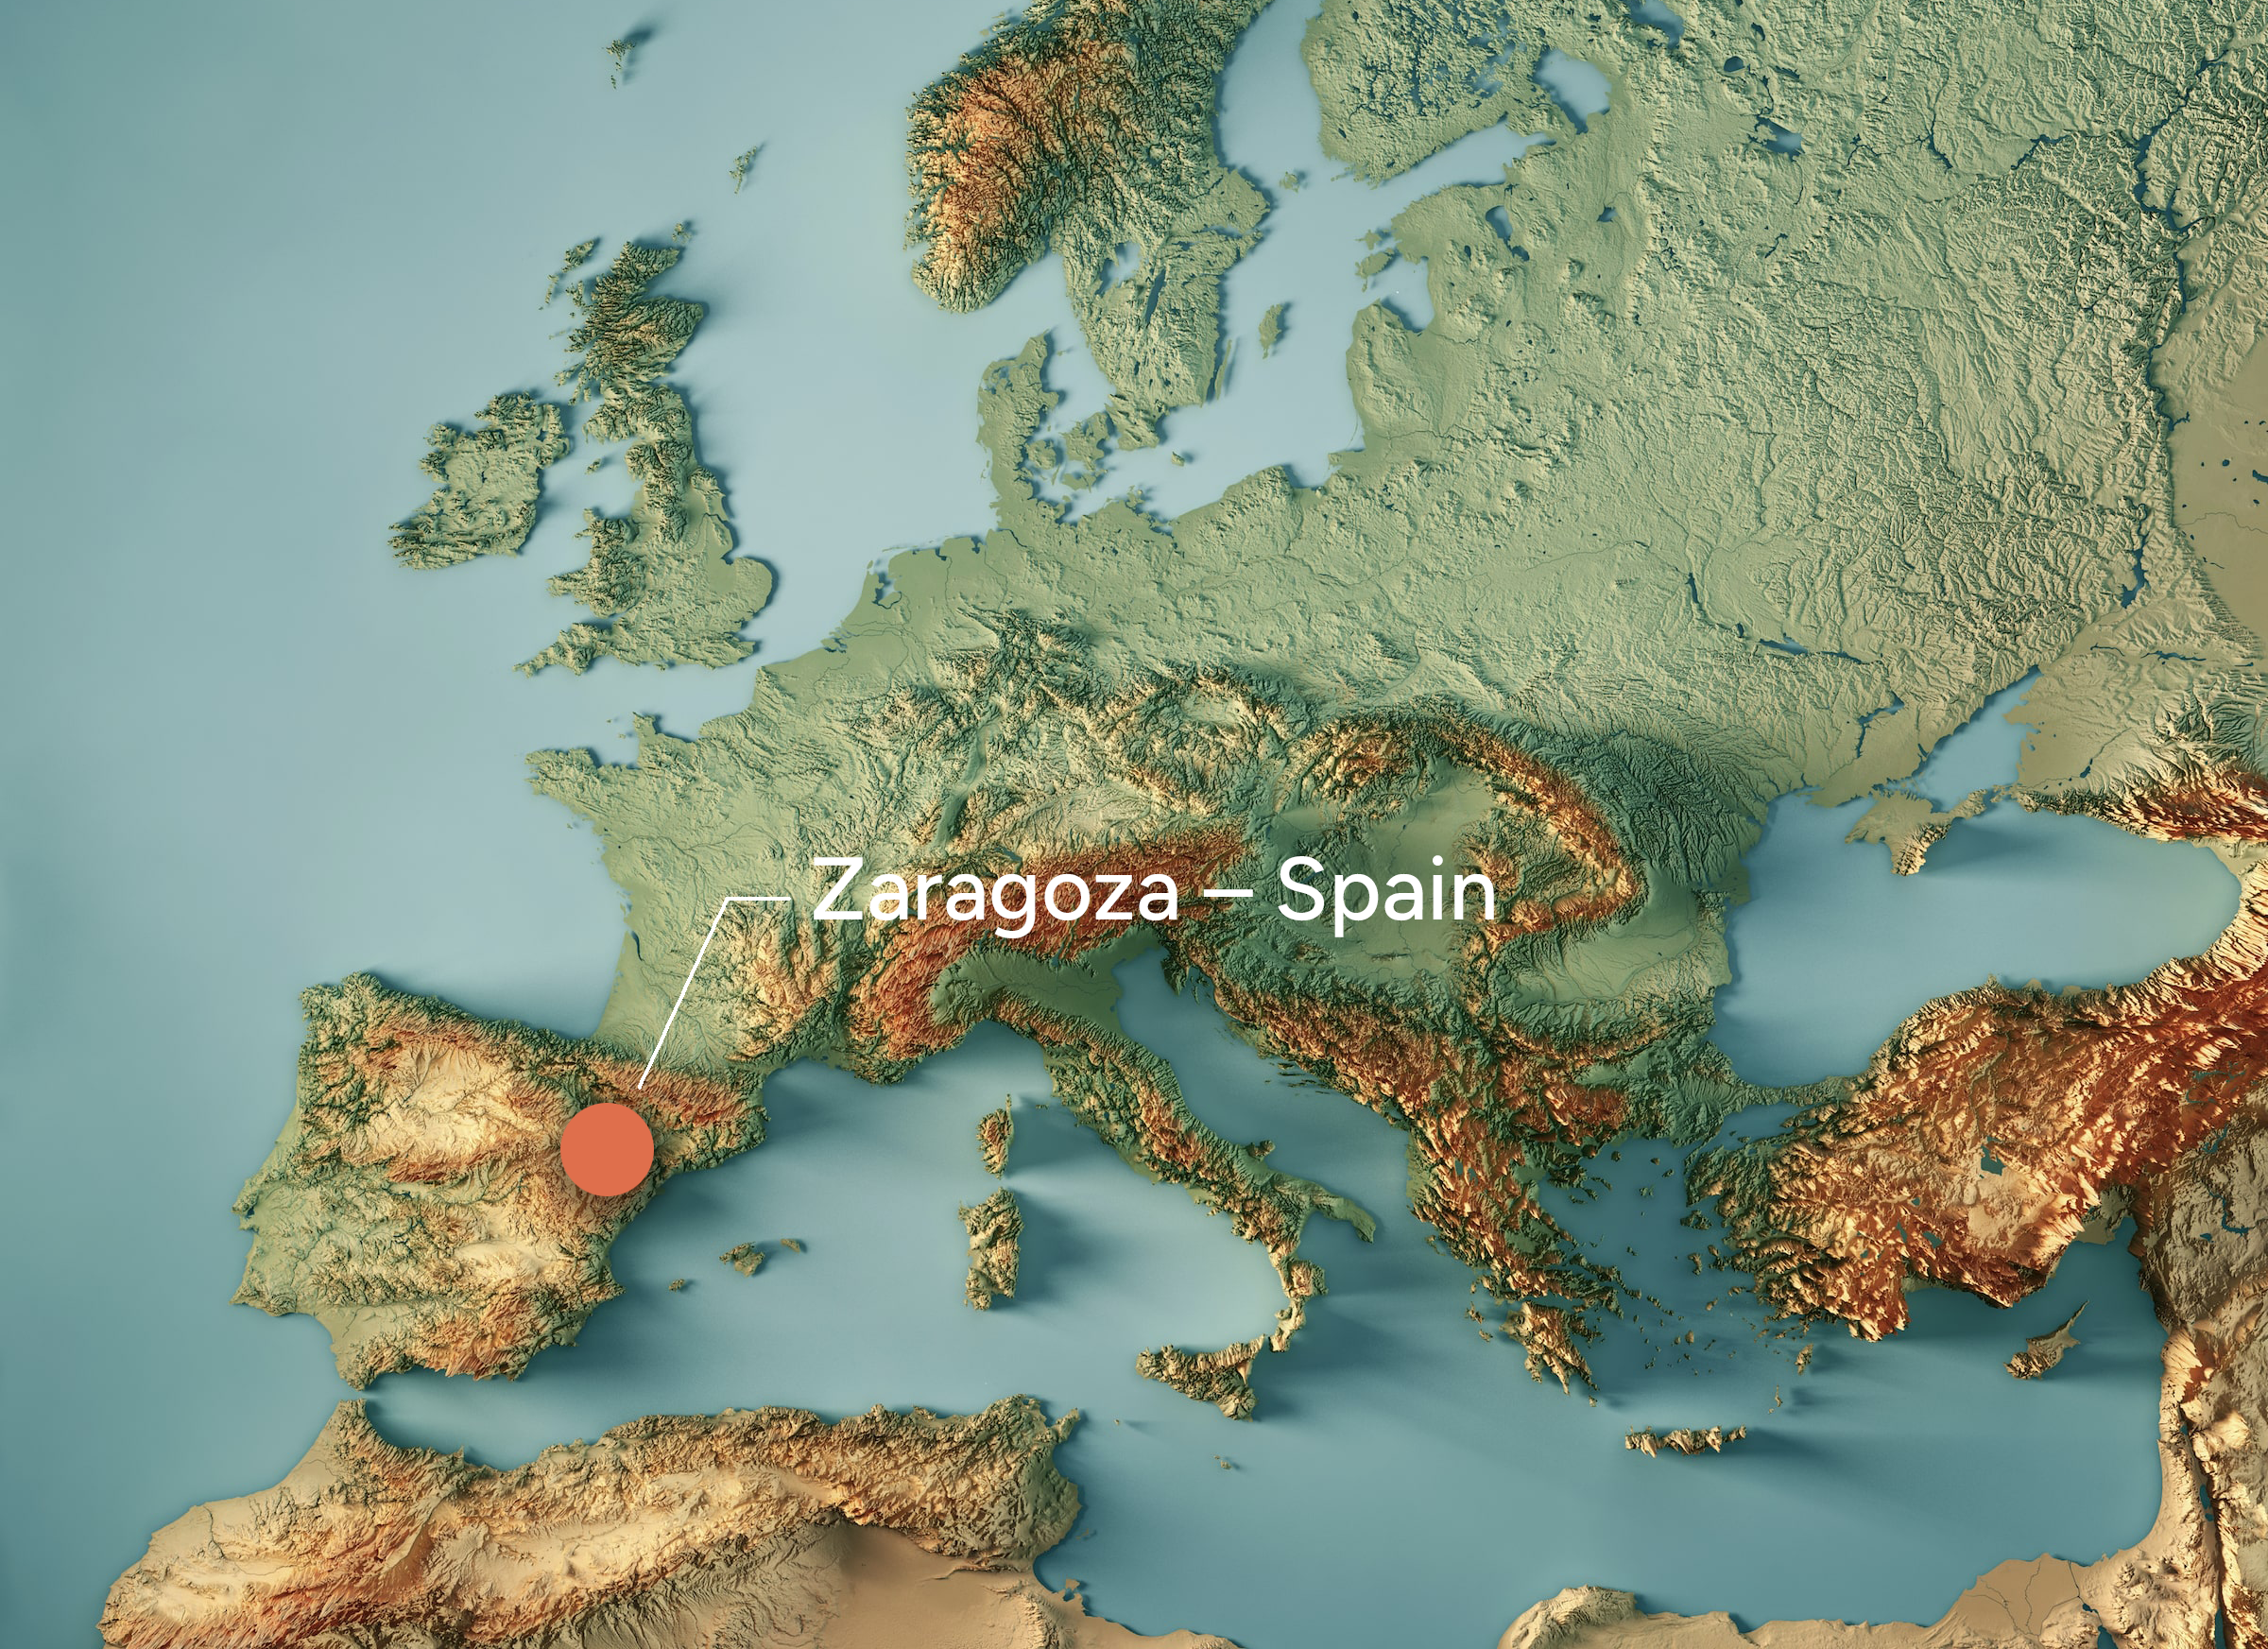 Topography map of Europe highlighting Zaragoza, Spain